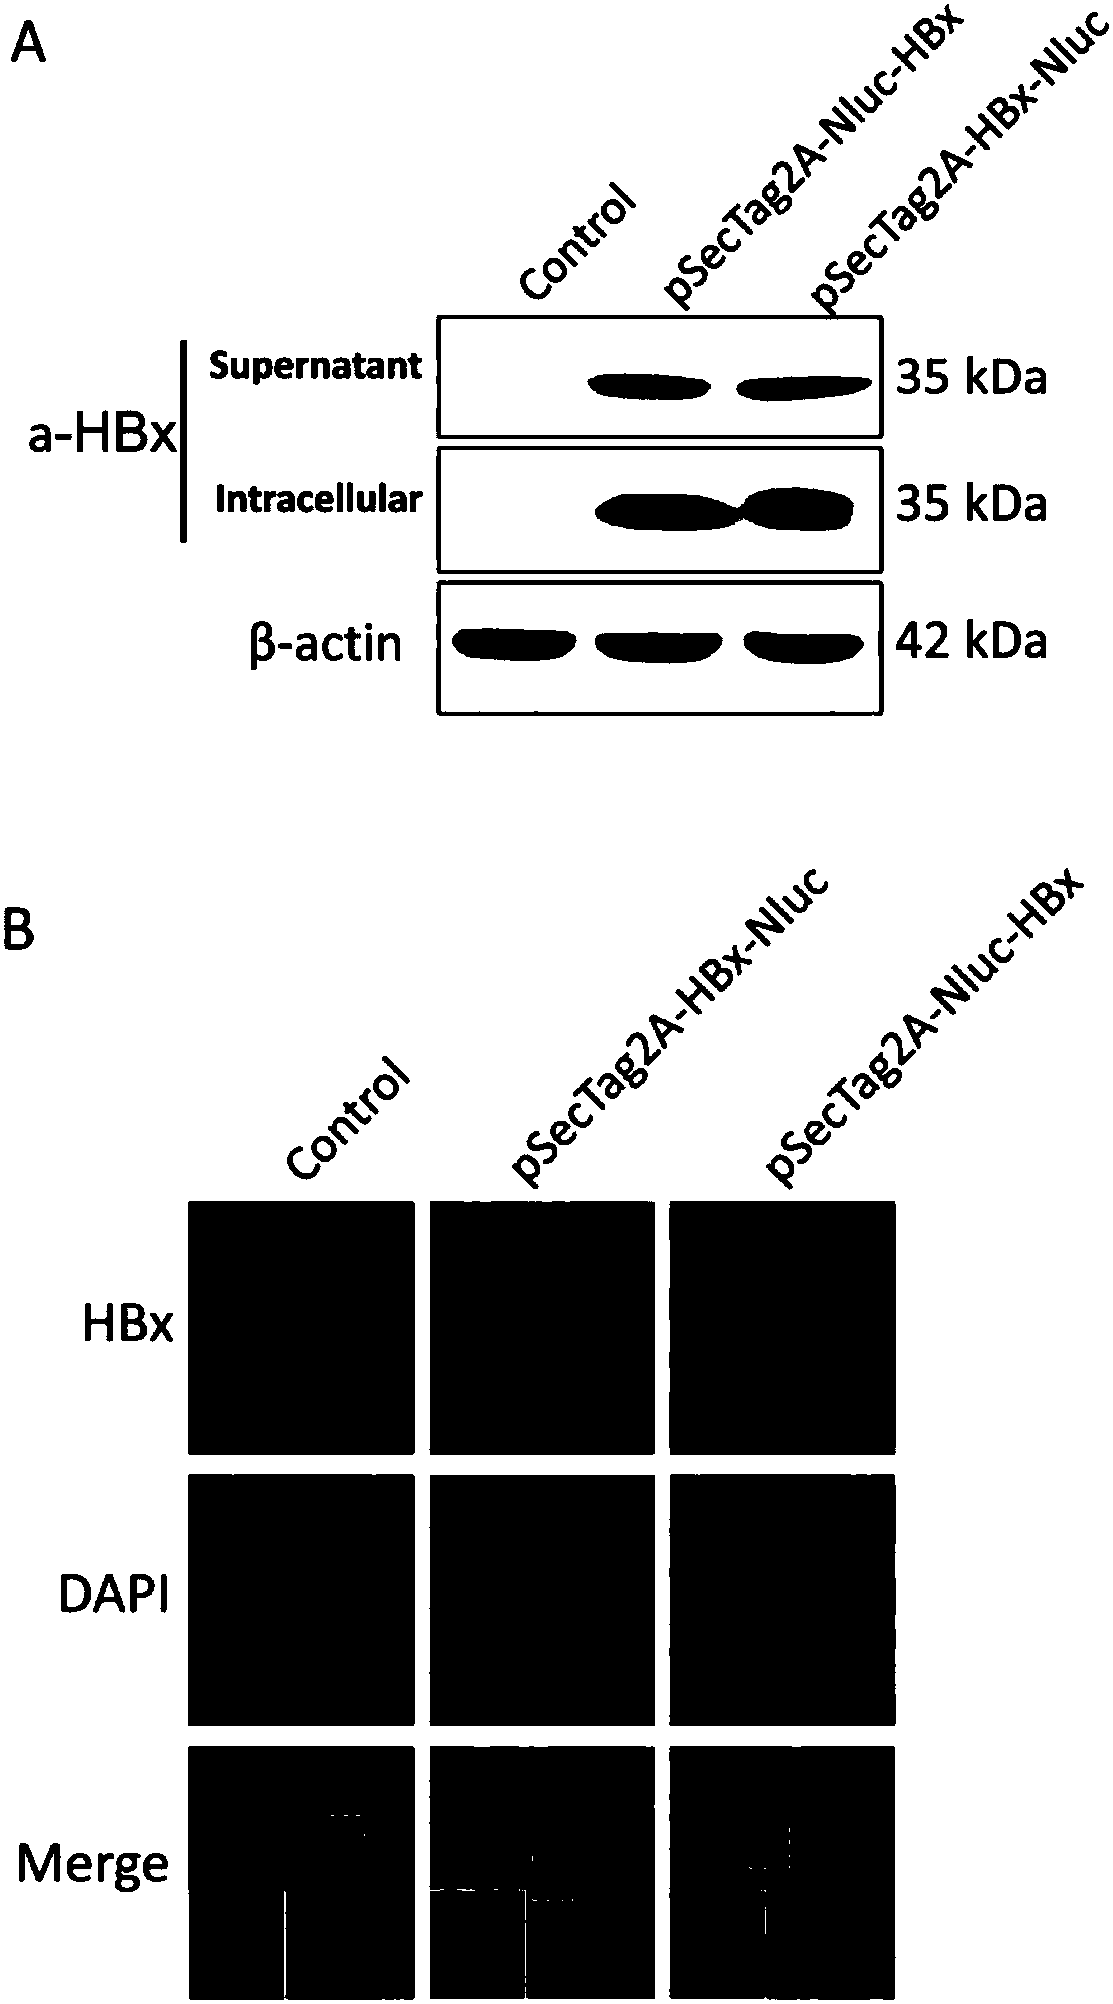 Method for evaluating X protein binding molecule of human hepatitis C virus